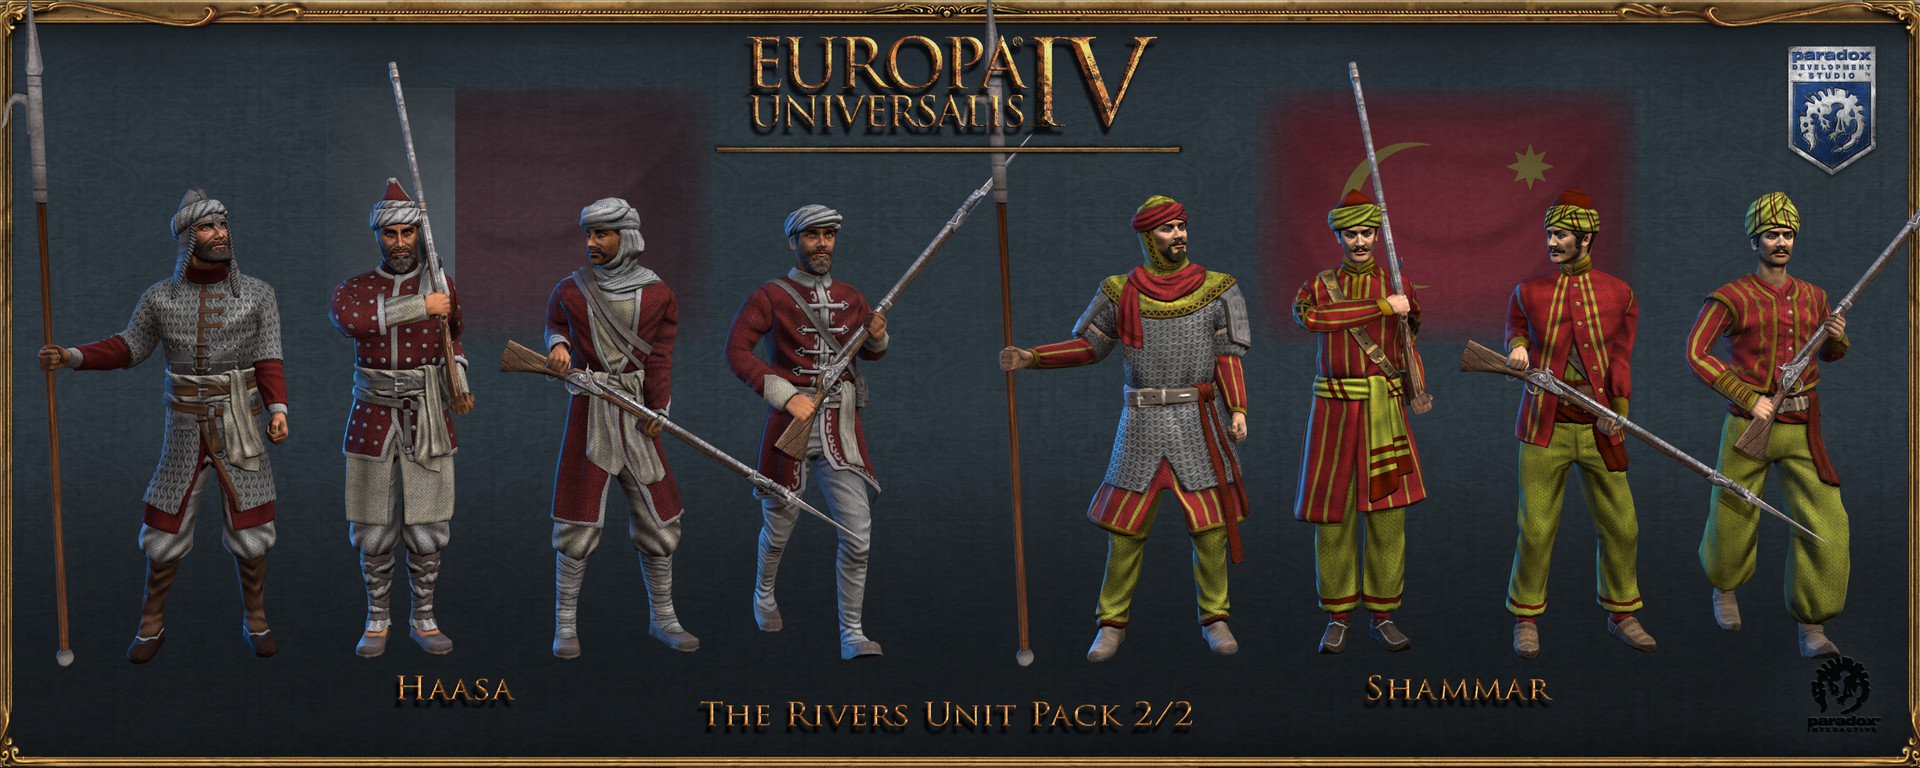 Europa Universalis IV Cradle of Civilization Collection 17